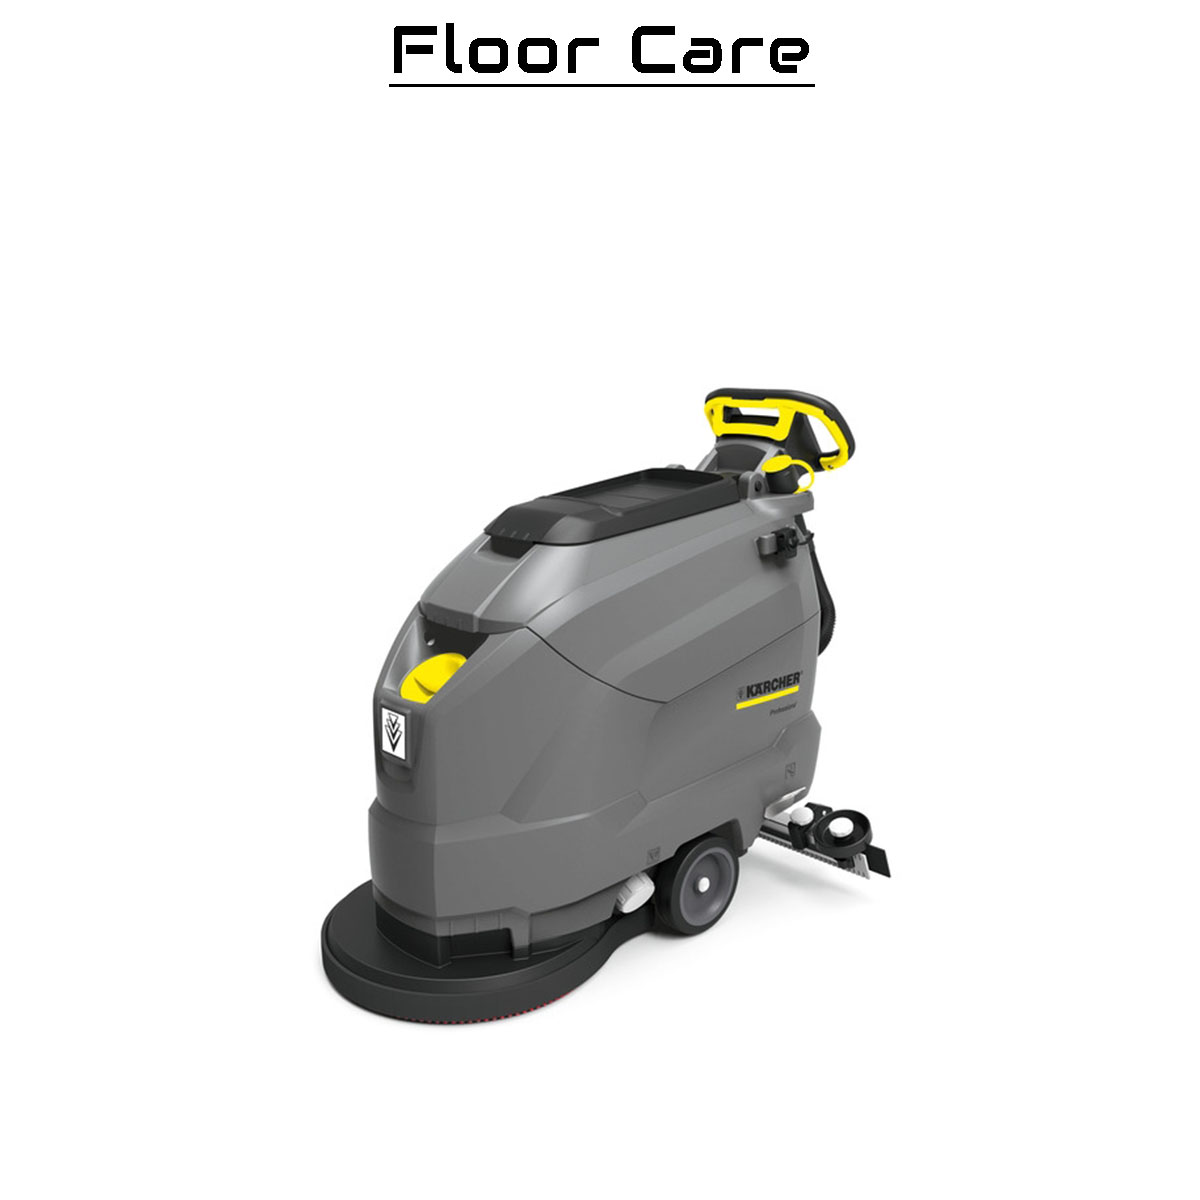 Floor Care